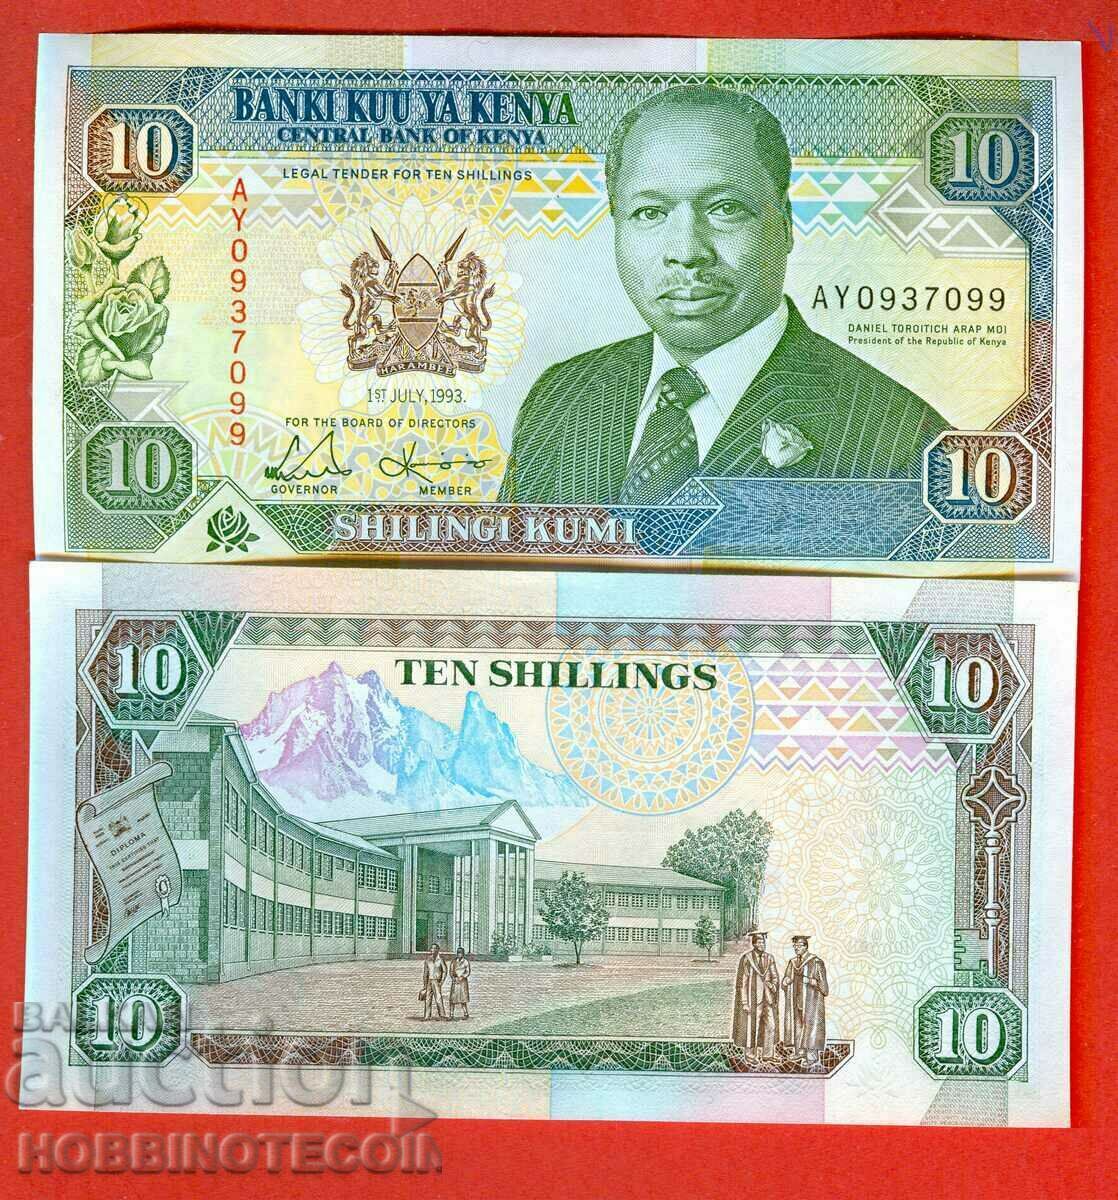 KENYA KENYA 10 Shilling issue - issue 1993 NEW UNC